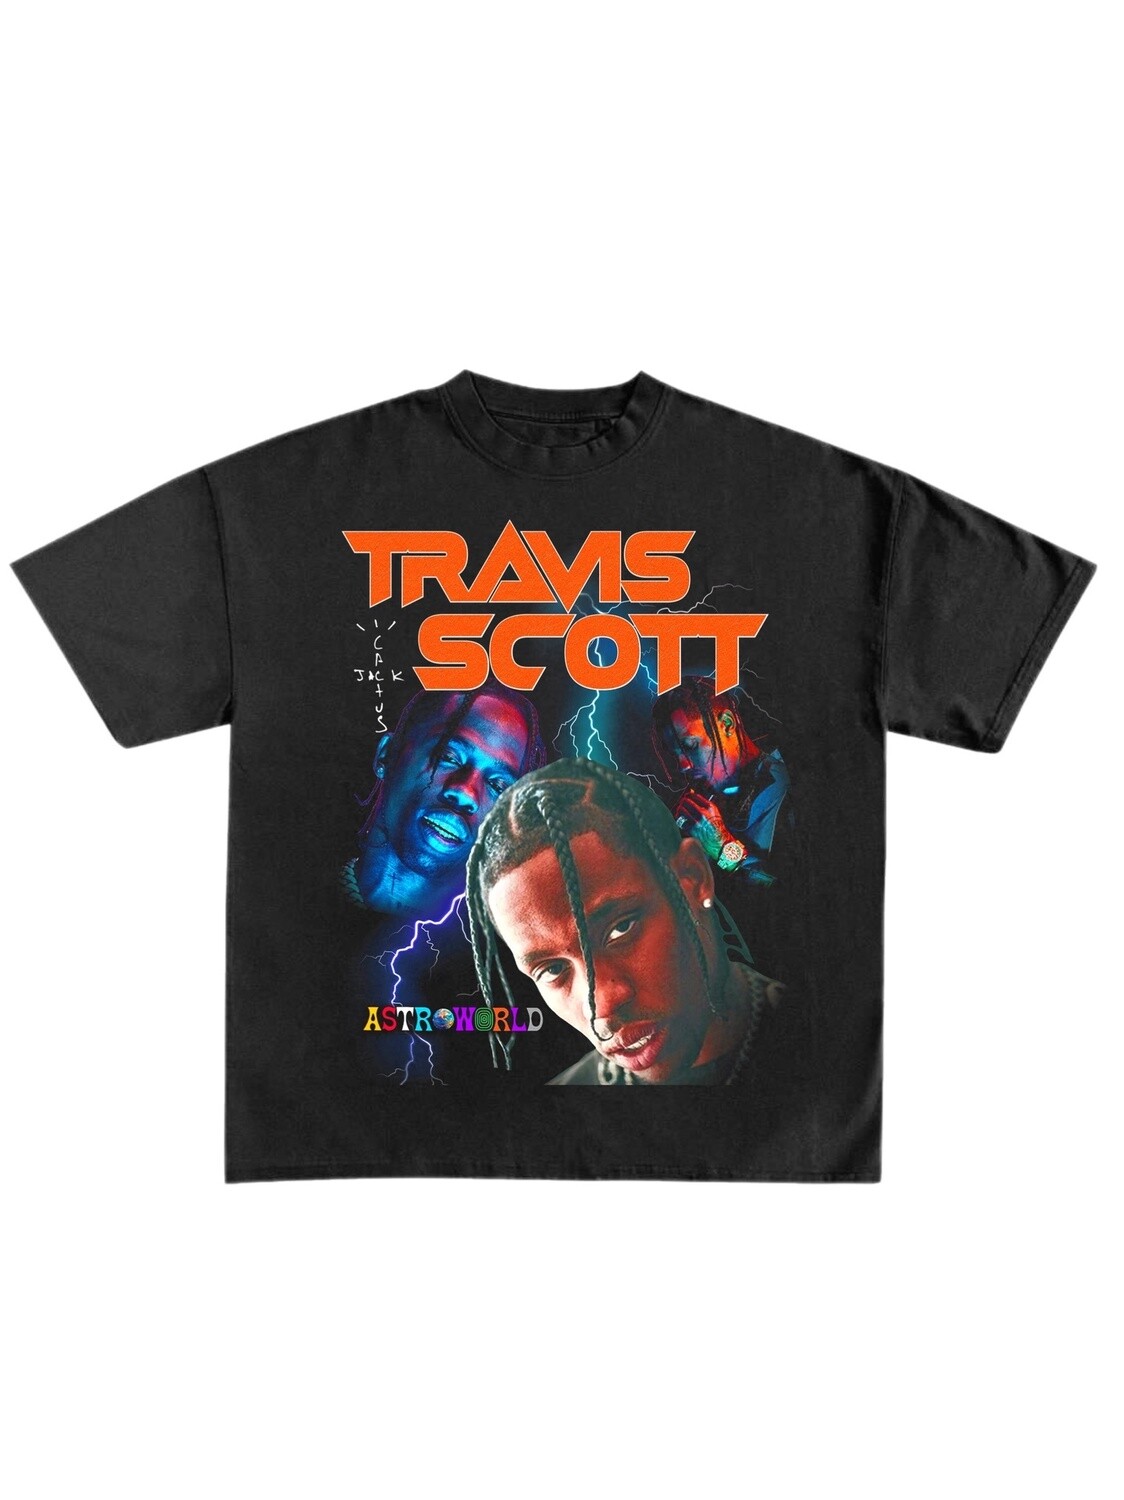 T-shirt Ghost Country Travis Scott Orange, Size: Large